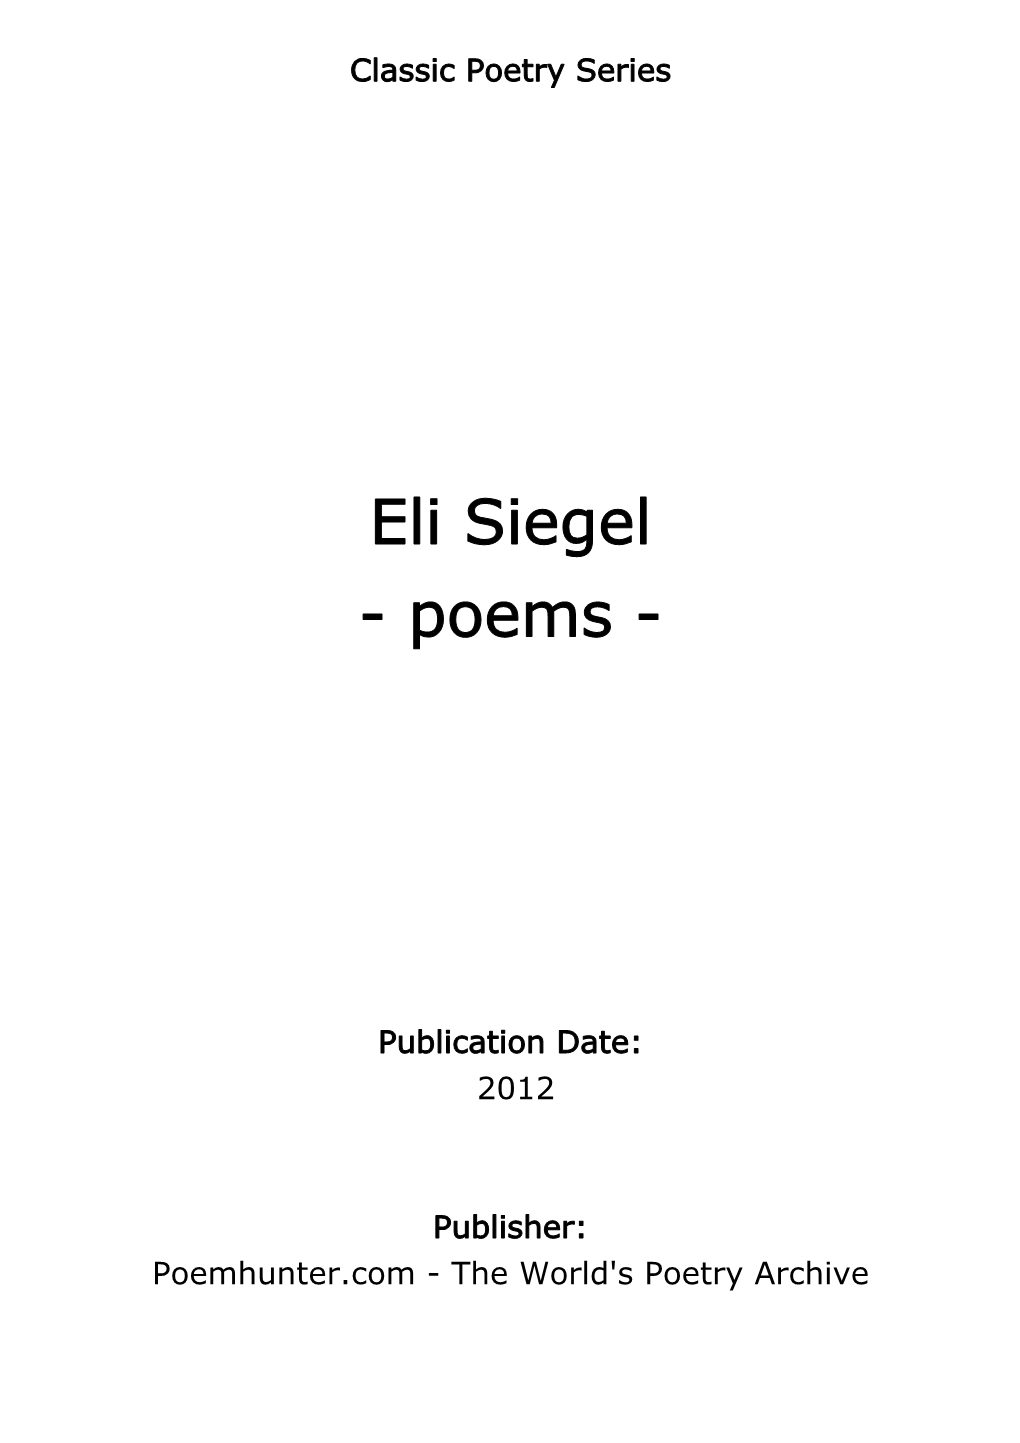 Eli Siegel - Poems